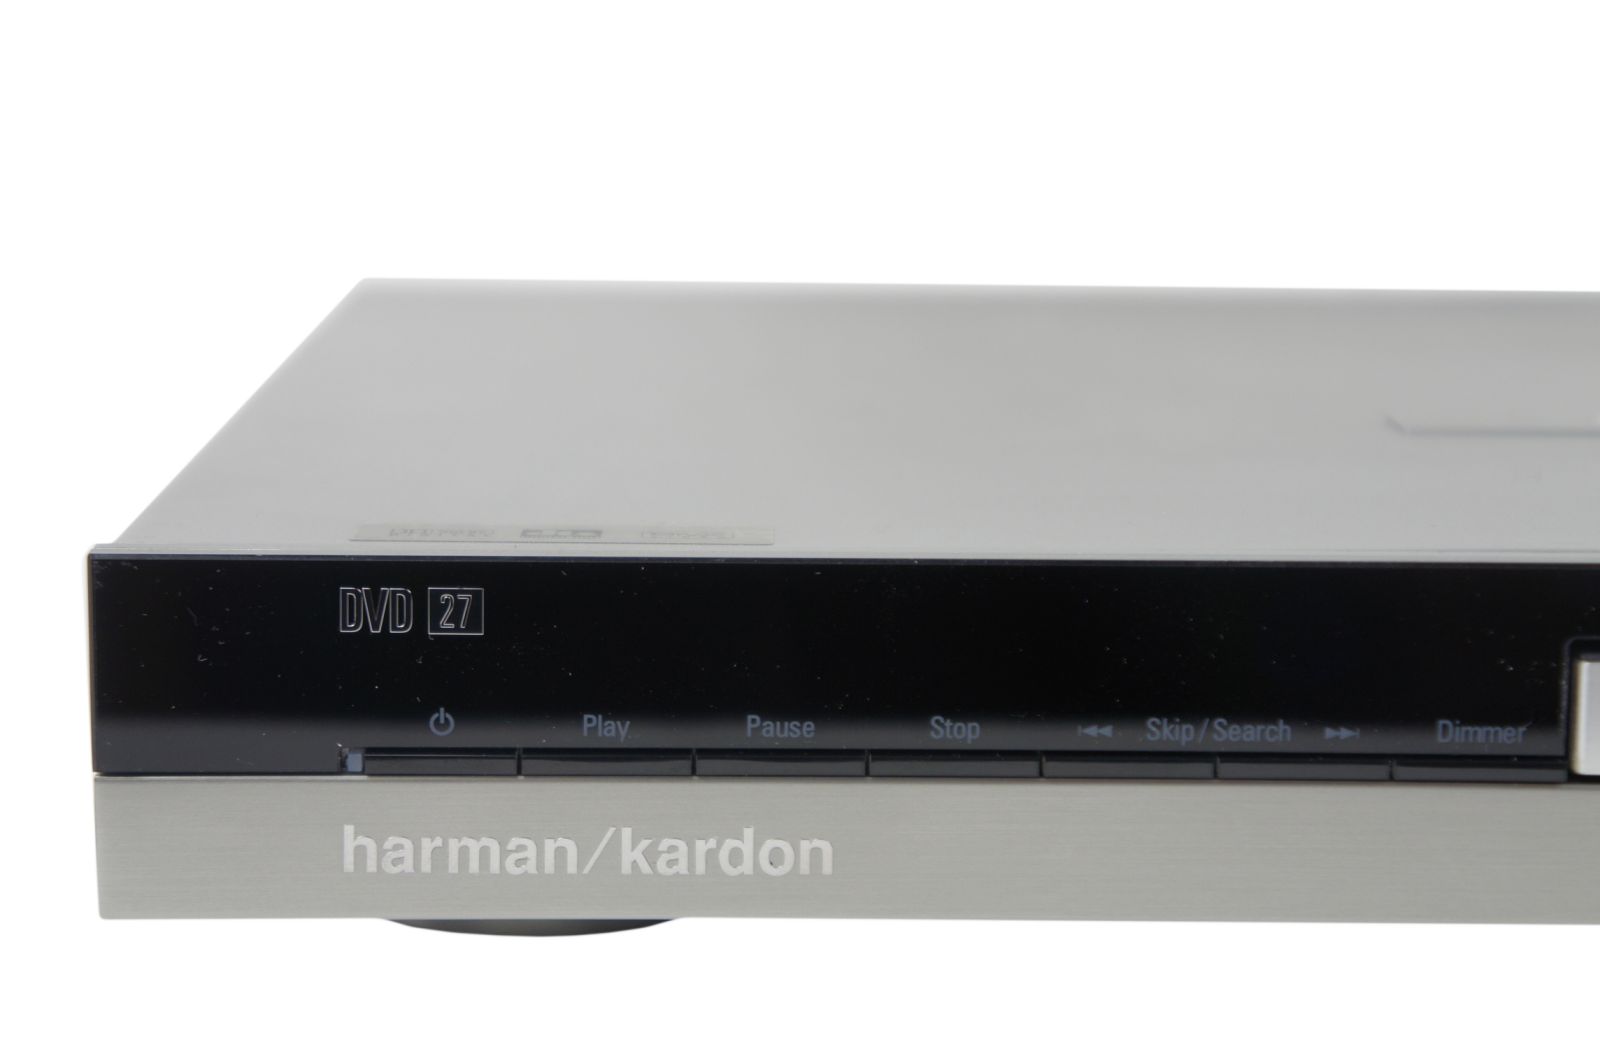 Harman_Kardon_DVD_27_DVD_Player_03